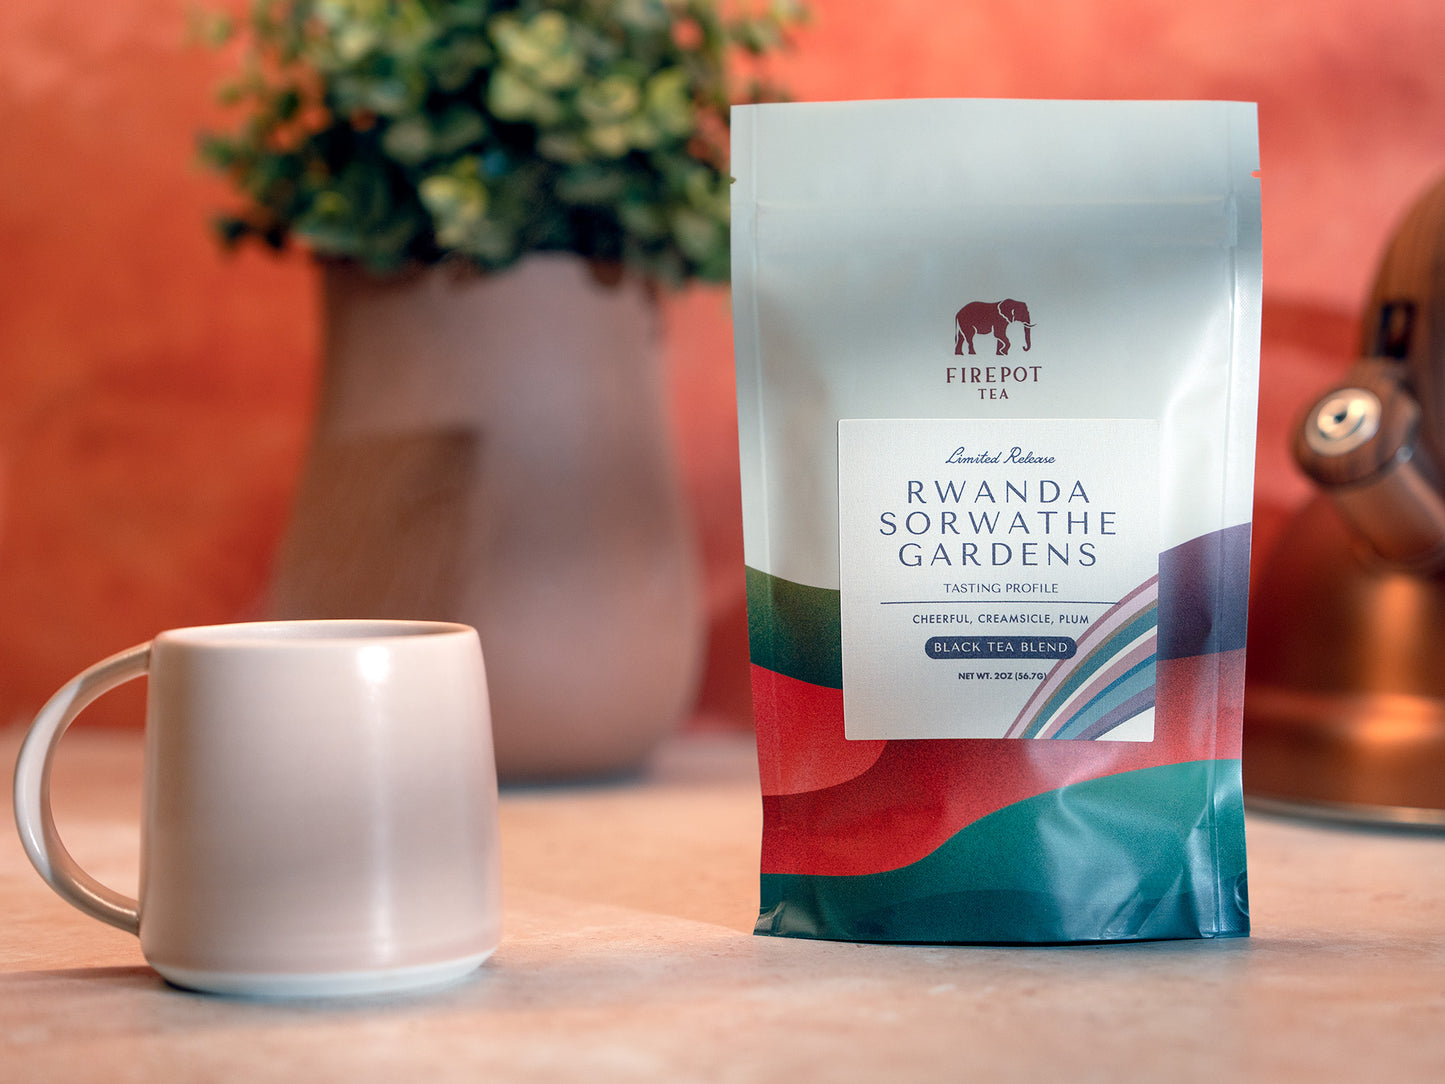 Rwanda Sorwathe Gardens black tea blend 2 ounce bag and mug